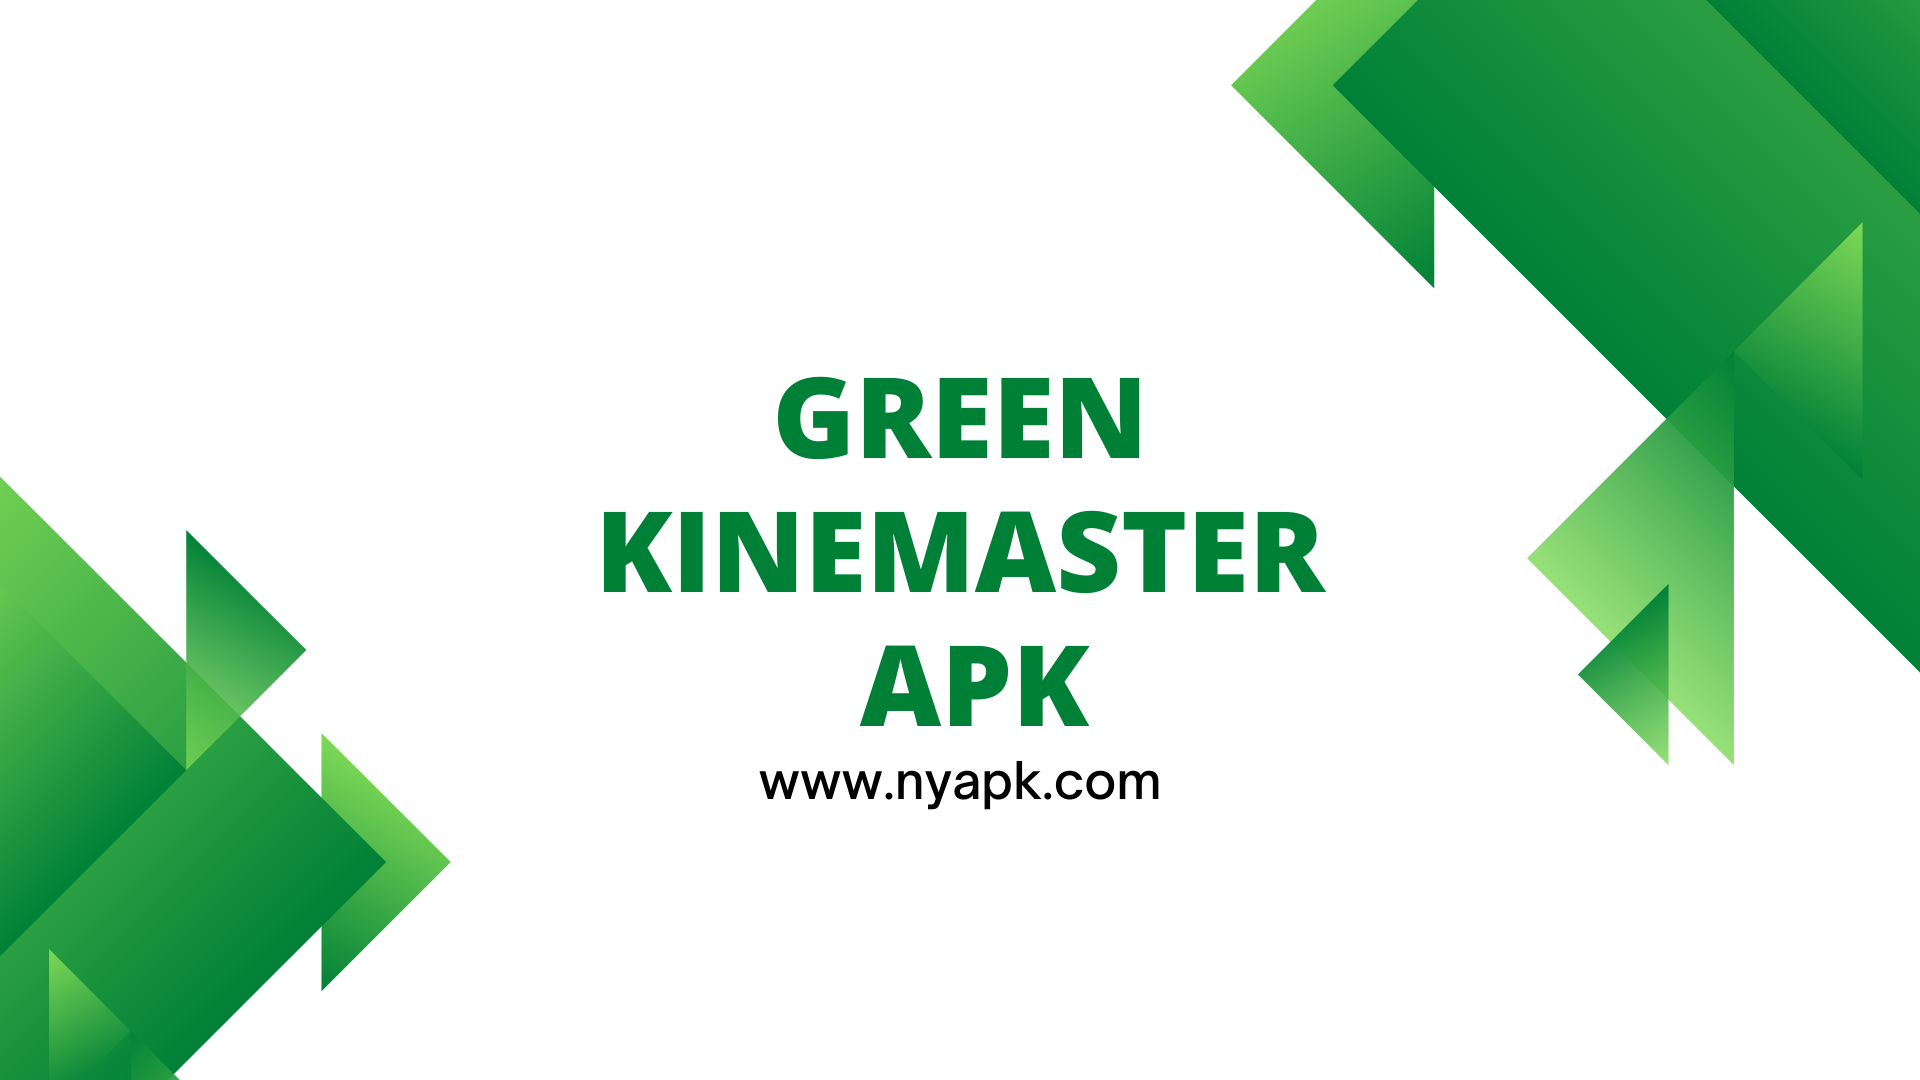 Green Kinemaster APK